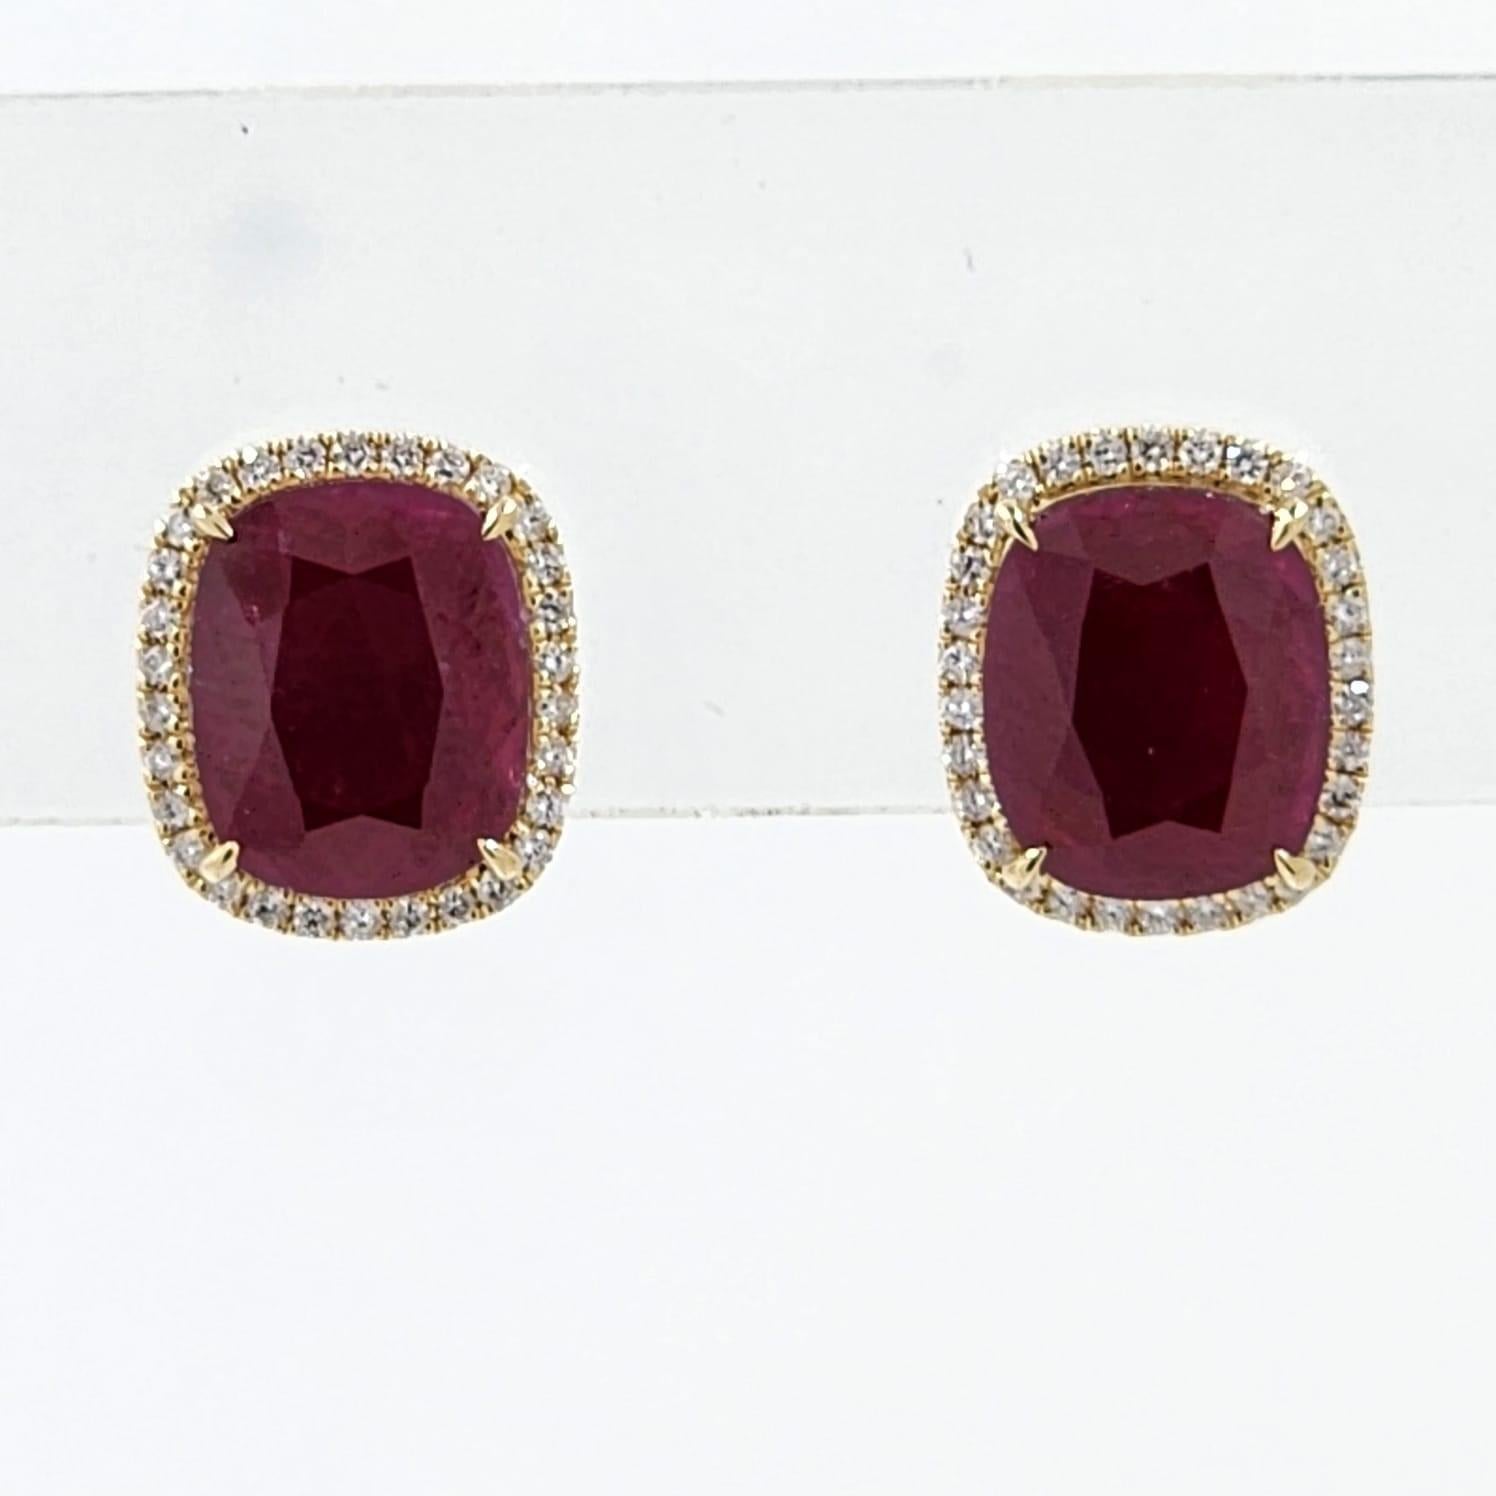 IGI Certified 7.10 Carat Natural Ruby Diamond Stud Earrings For Sale 1